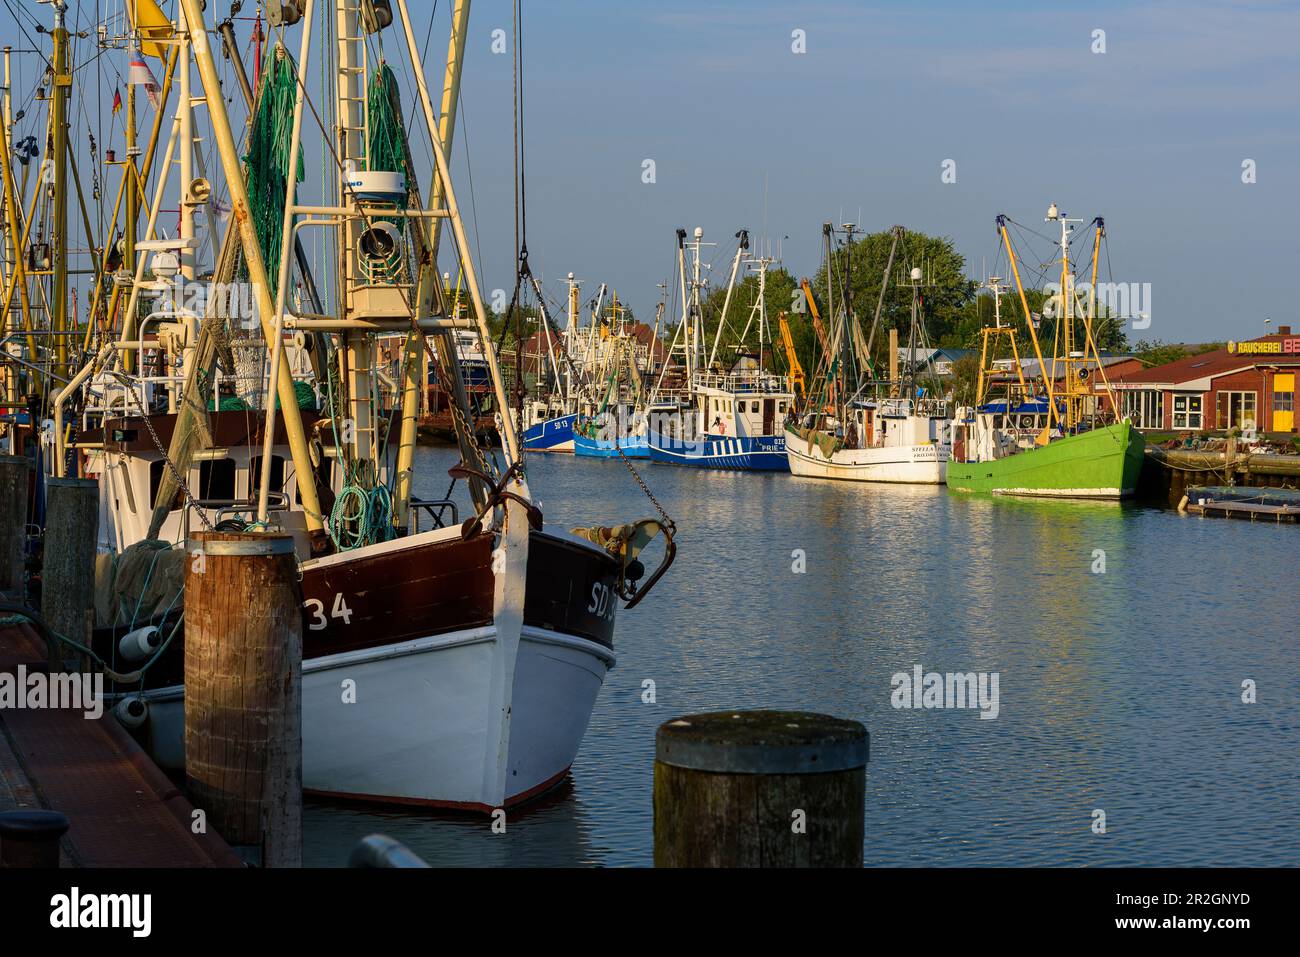 Harbor with shrimp cutters in Büsum, Büsum, Dithmarschen, North Sea Coast, Schleswig Holstein, Germany, Europe Stock Photo